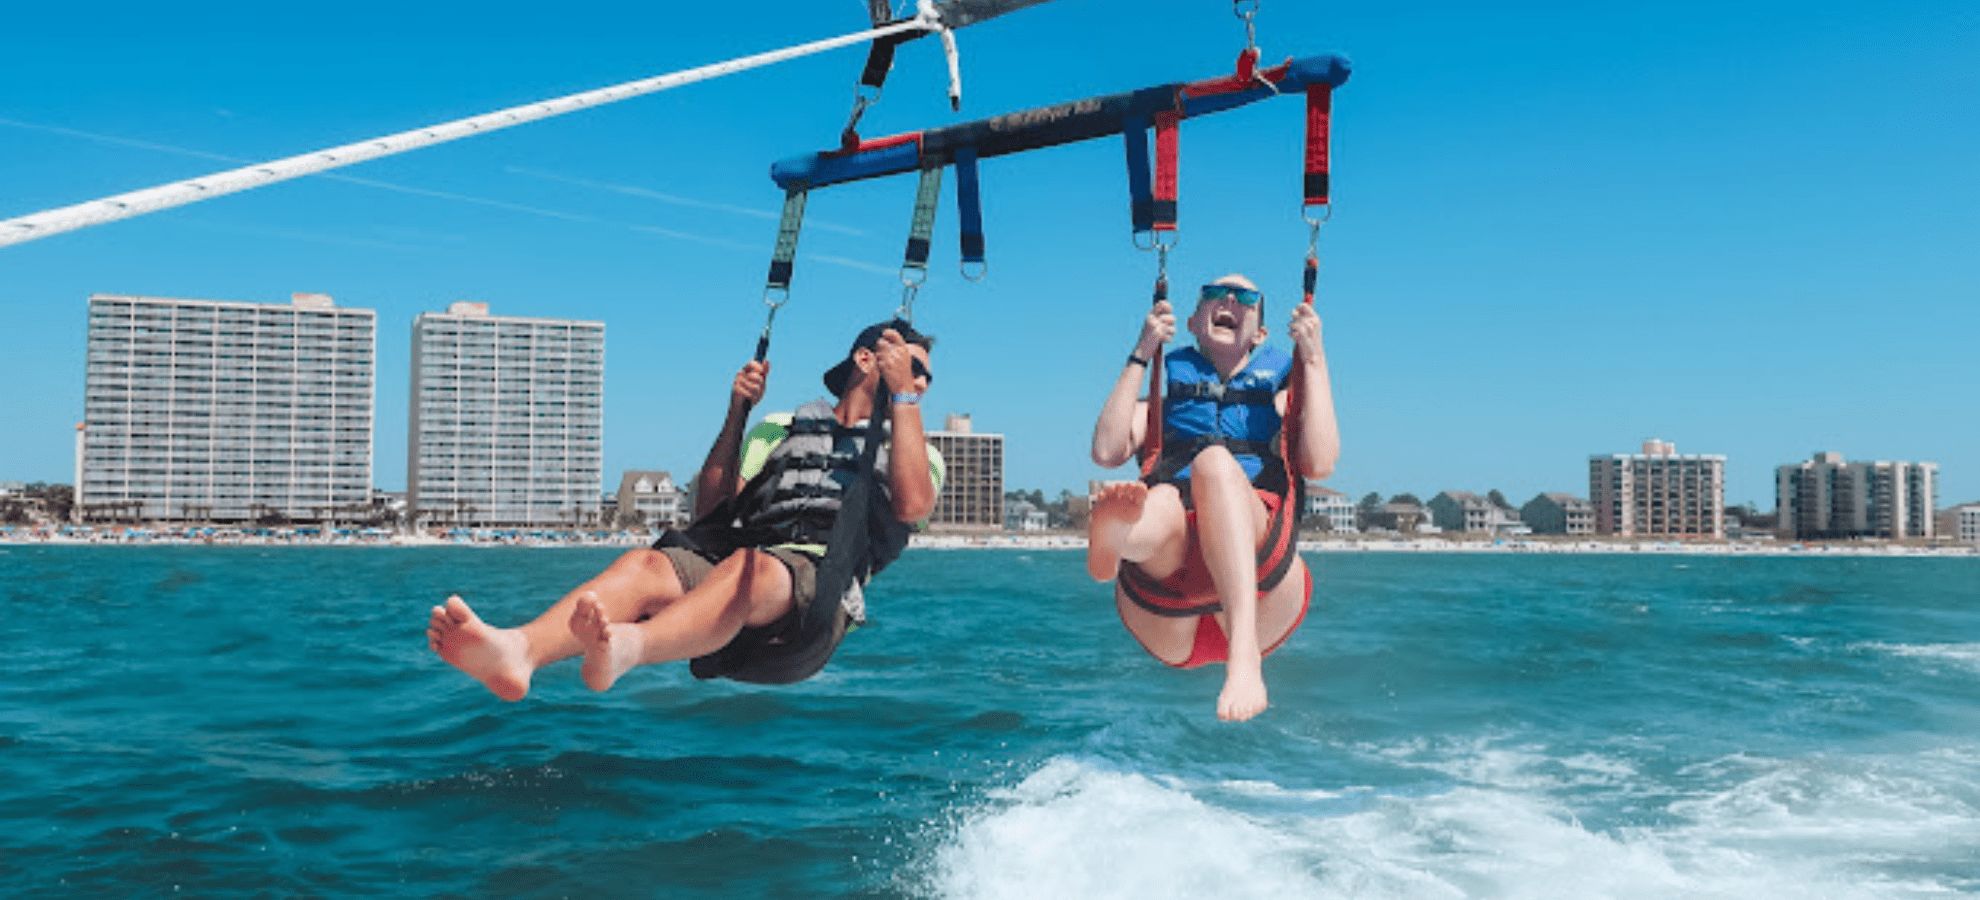 Get Your Adrenaline Pumping at These 7 Myrtle Beach Thrills